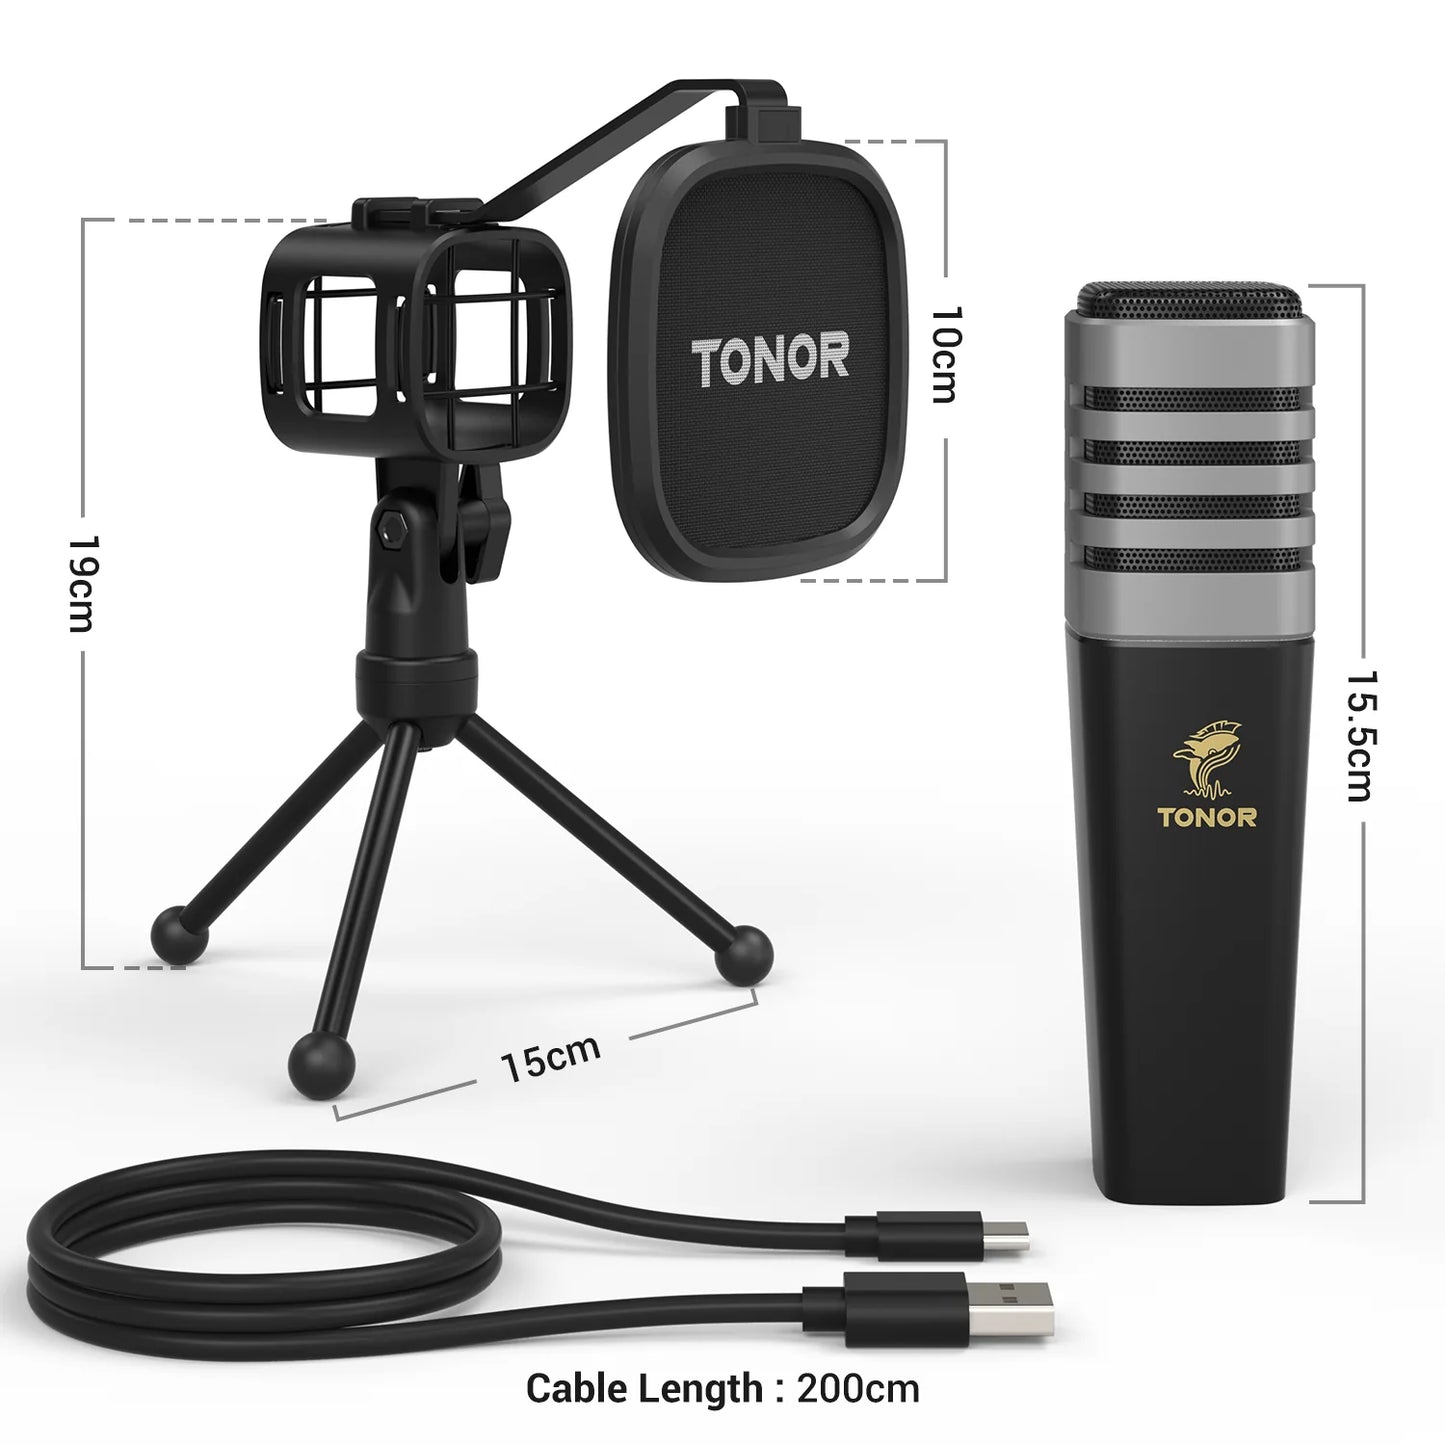 TONOR TC30 USB condenser microphone